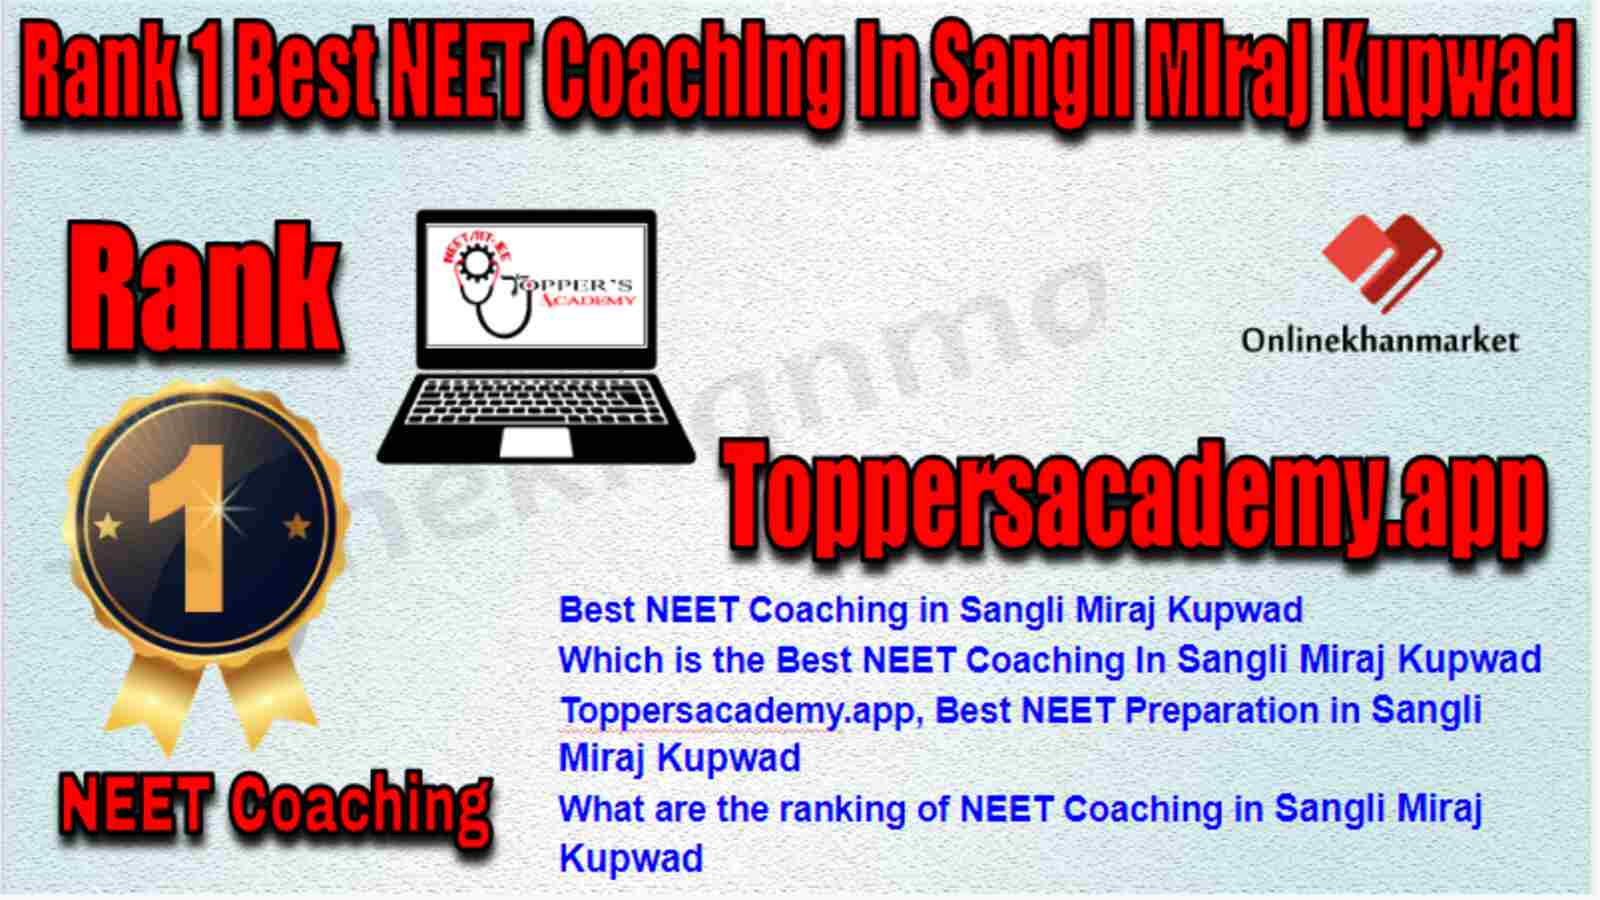 Rank 1 Best NEET Coaching in Sangli Miraj Kupwad